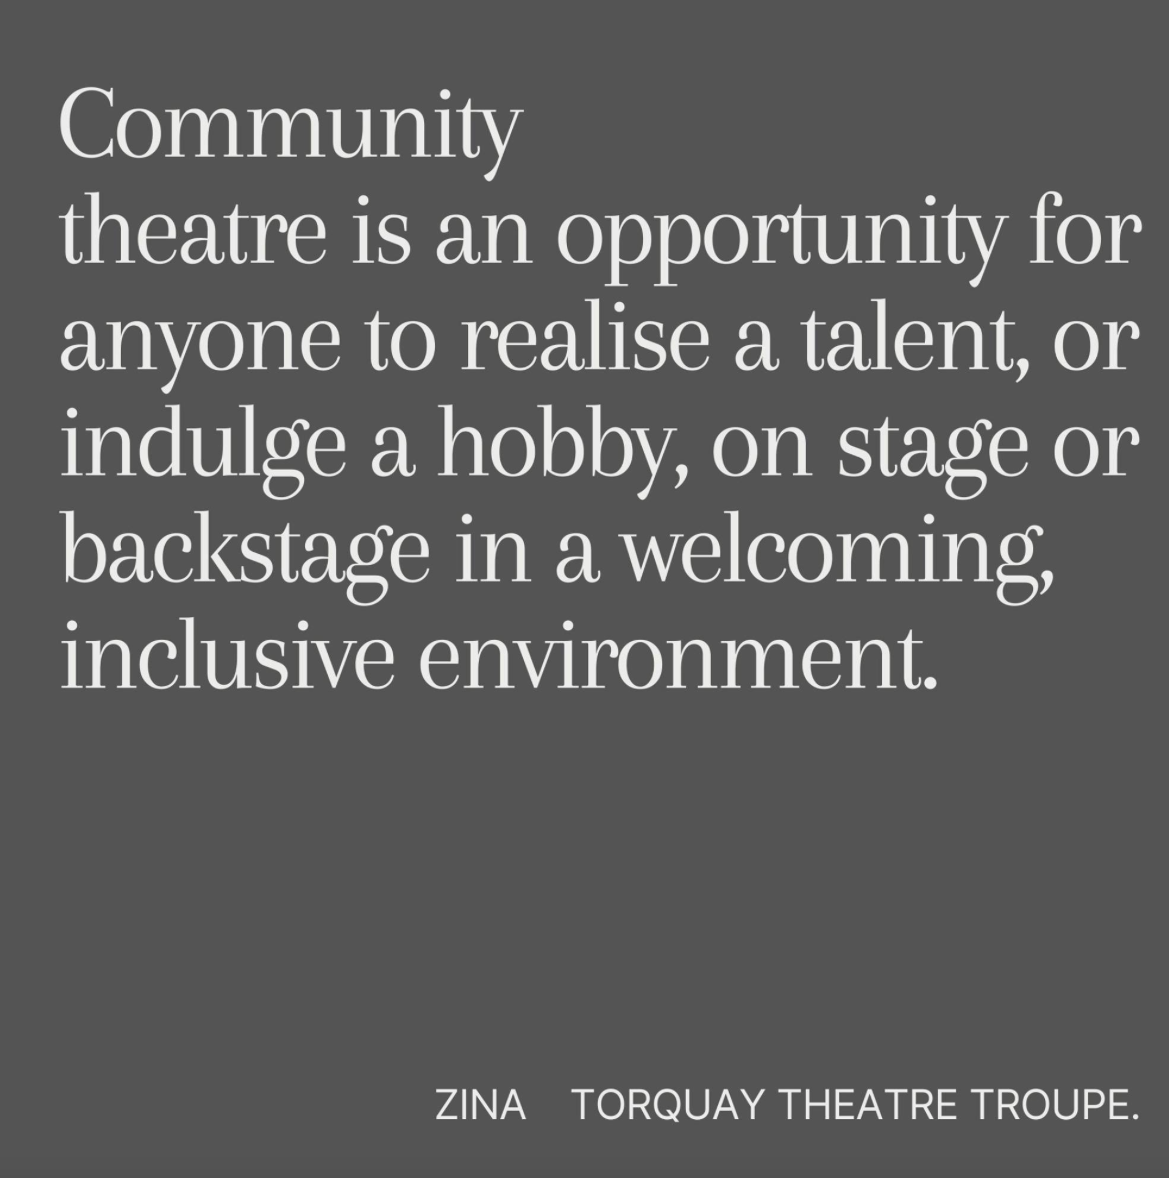 Community theatre is...